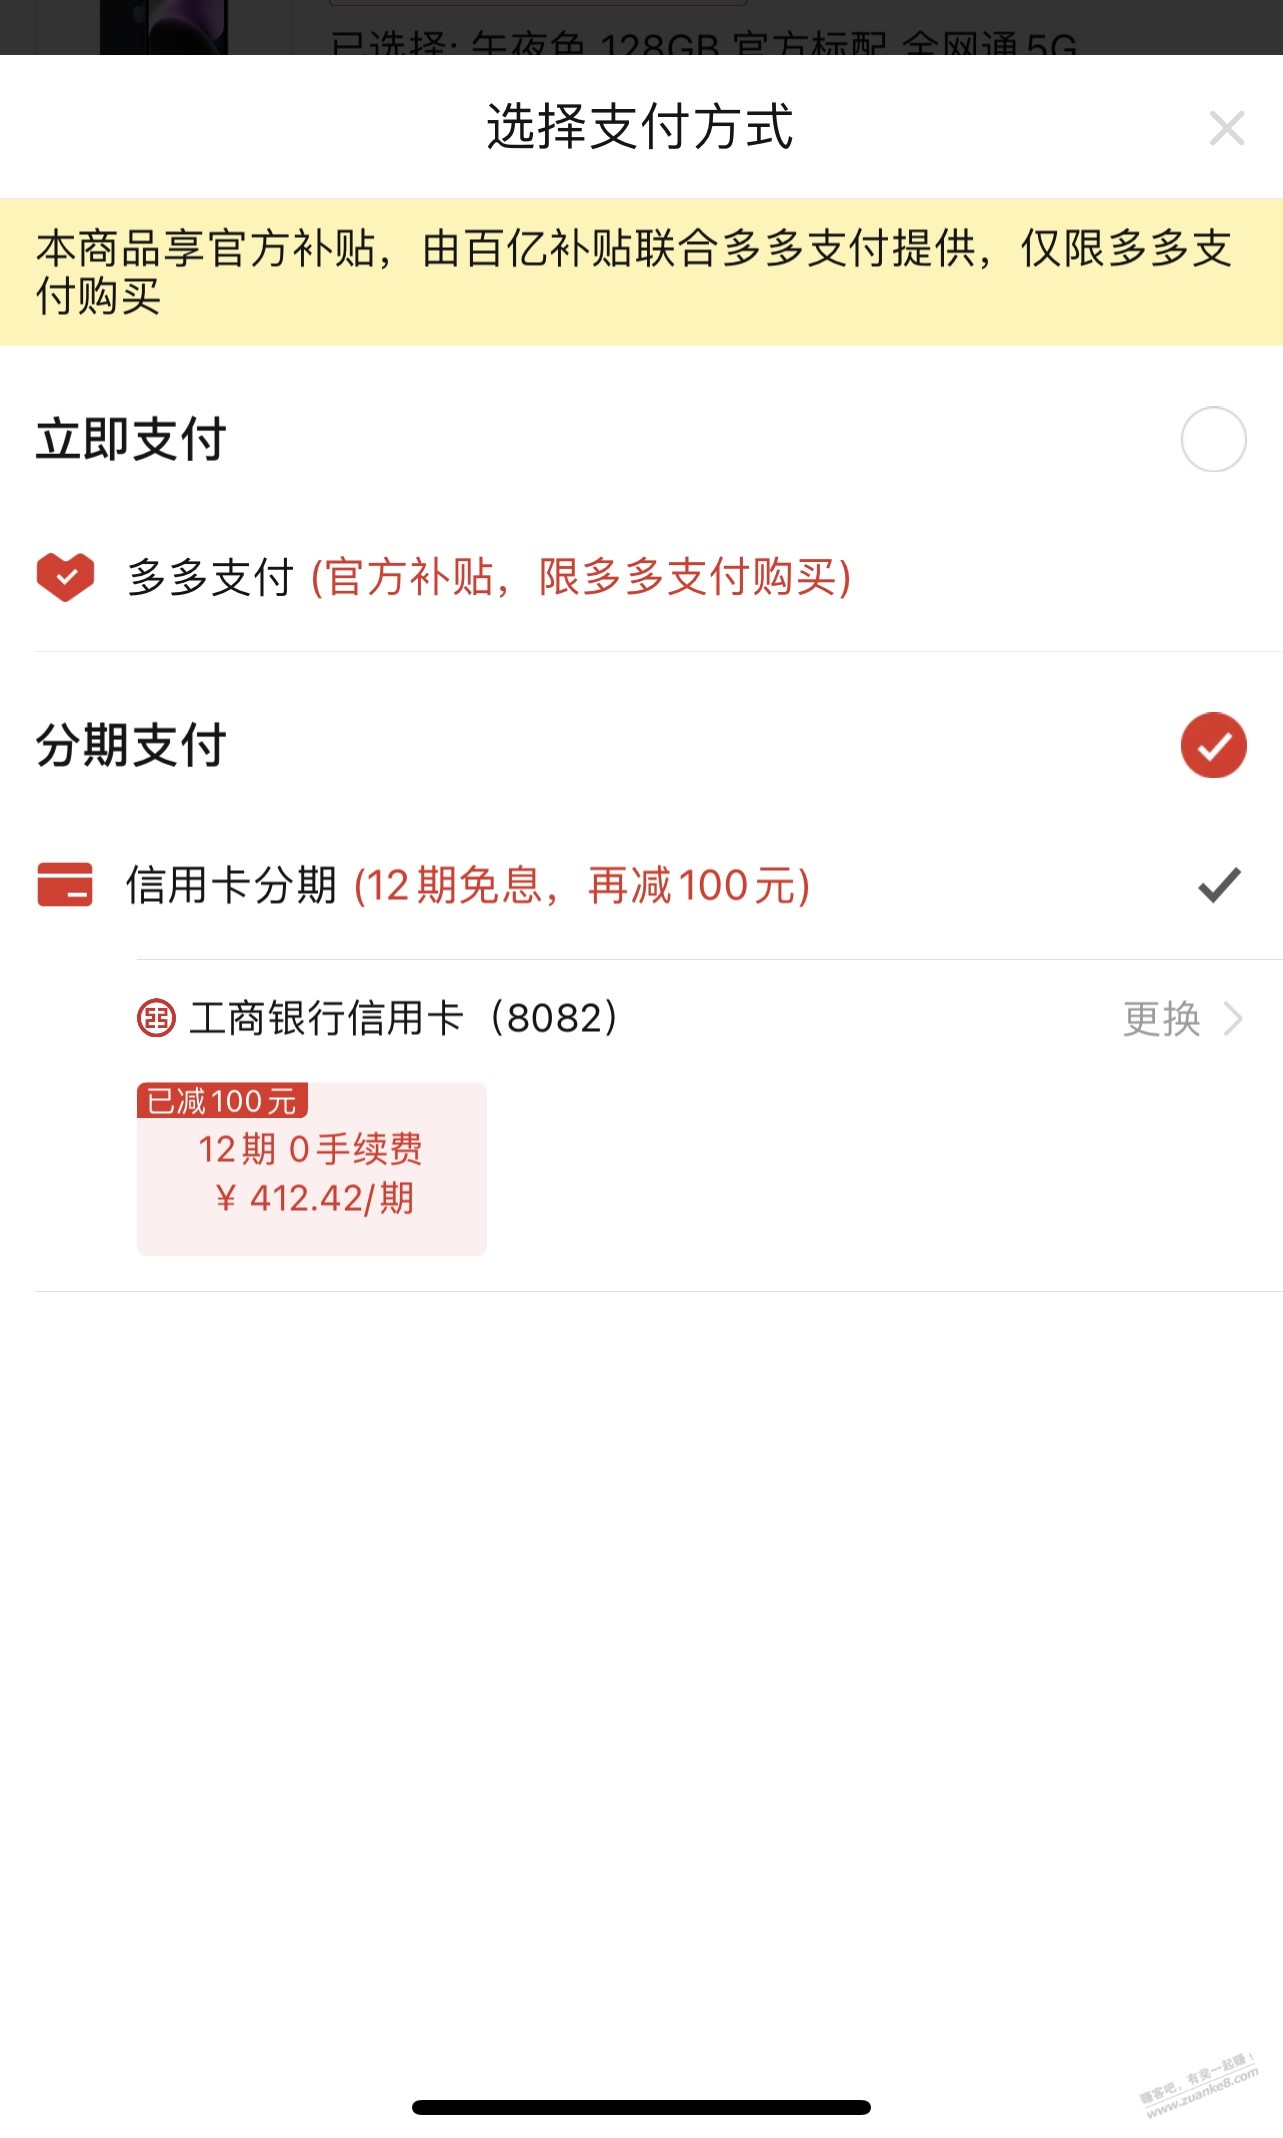 pdd 14 5049 工商xyk-100-惠小助(52huixz.com)